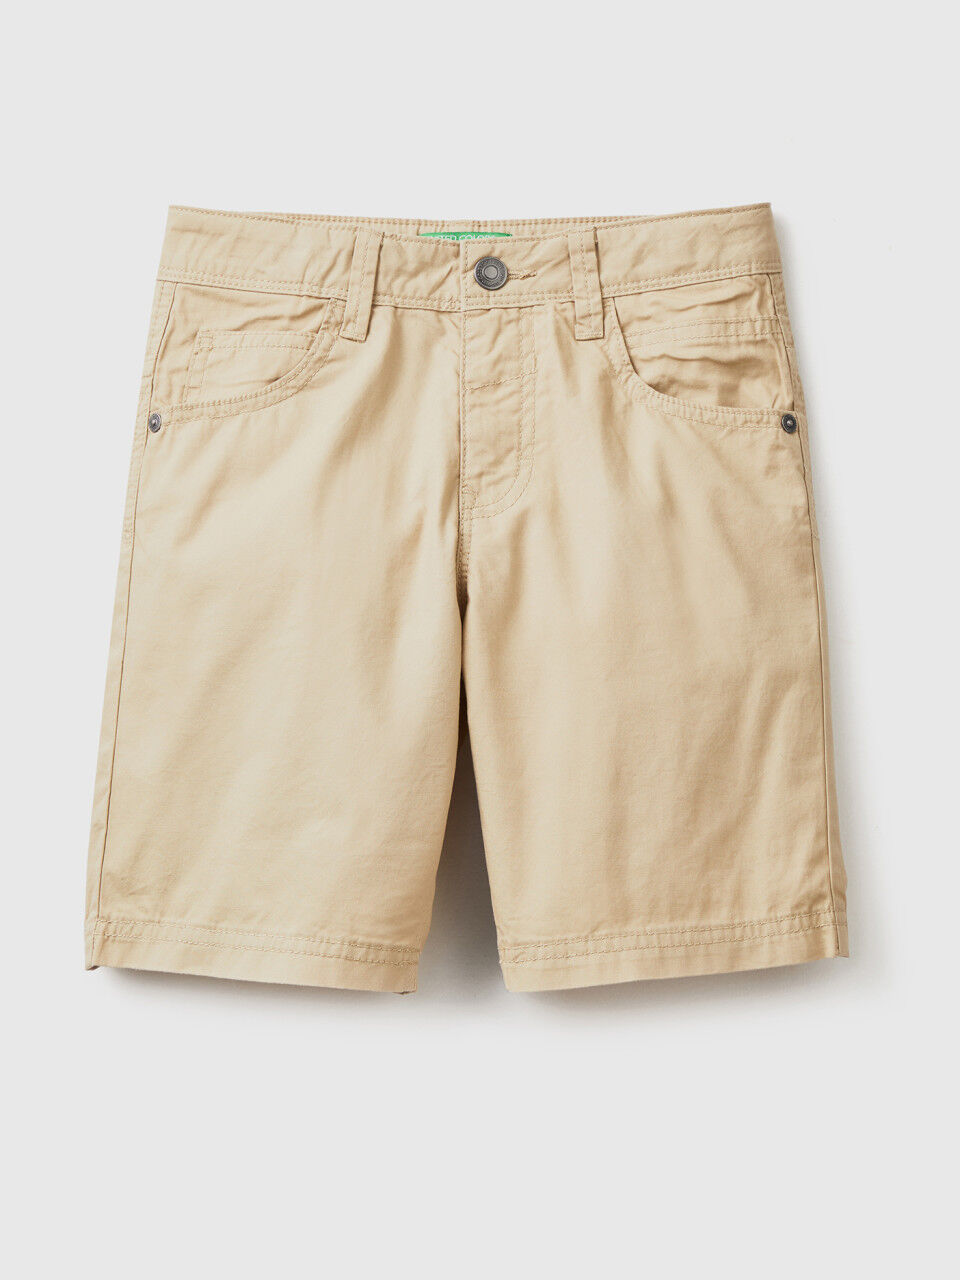 Five-pocket shorts